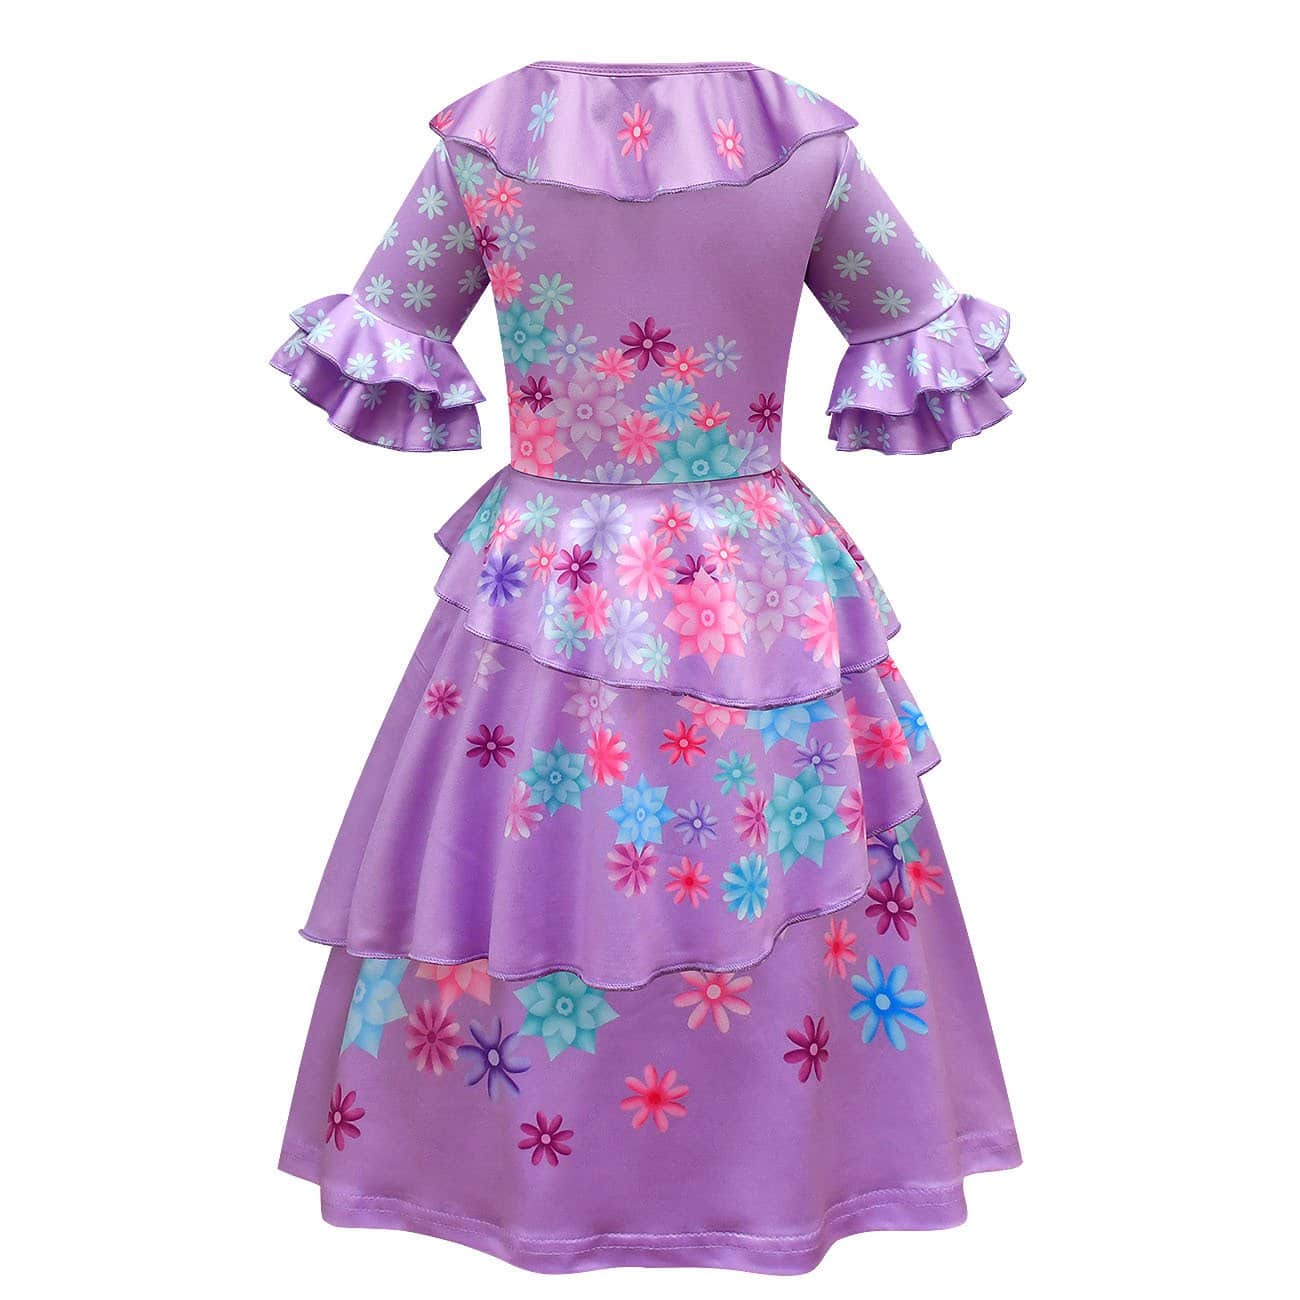 Encanto Isabela Dress Ruffle Princess Play Dress